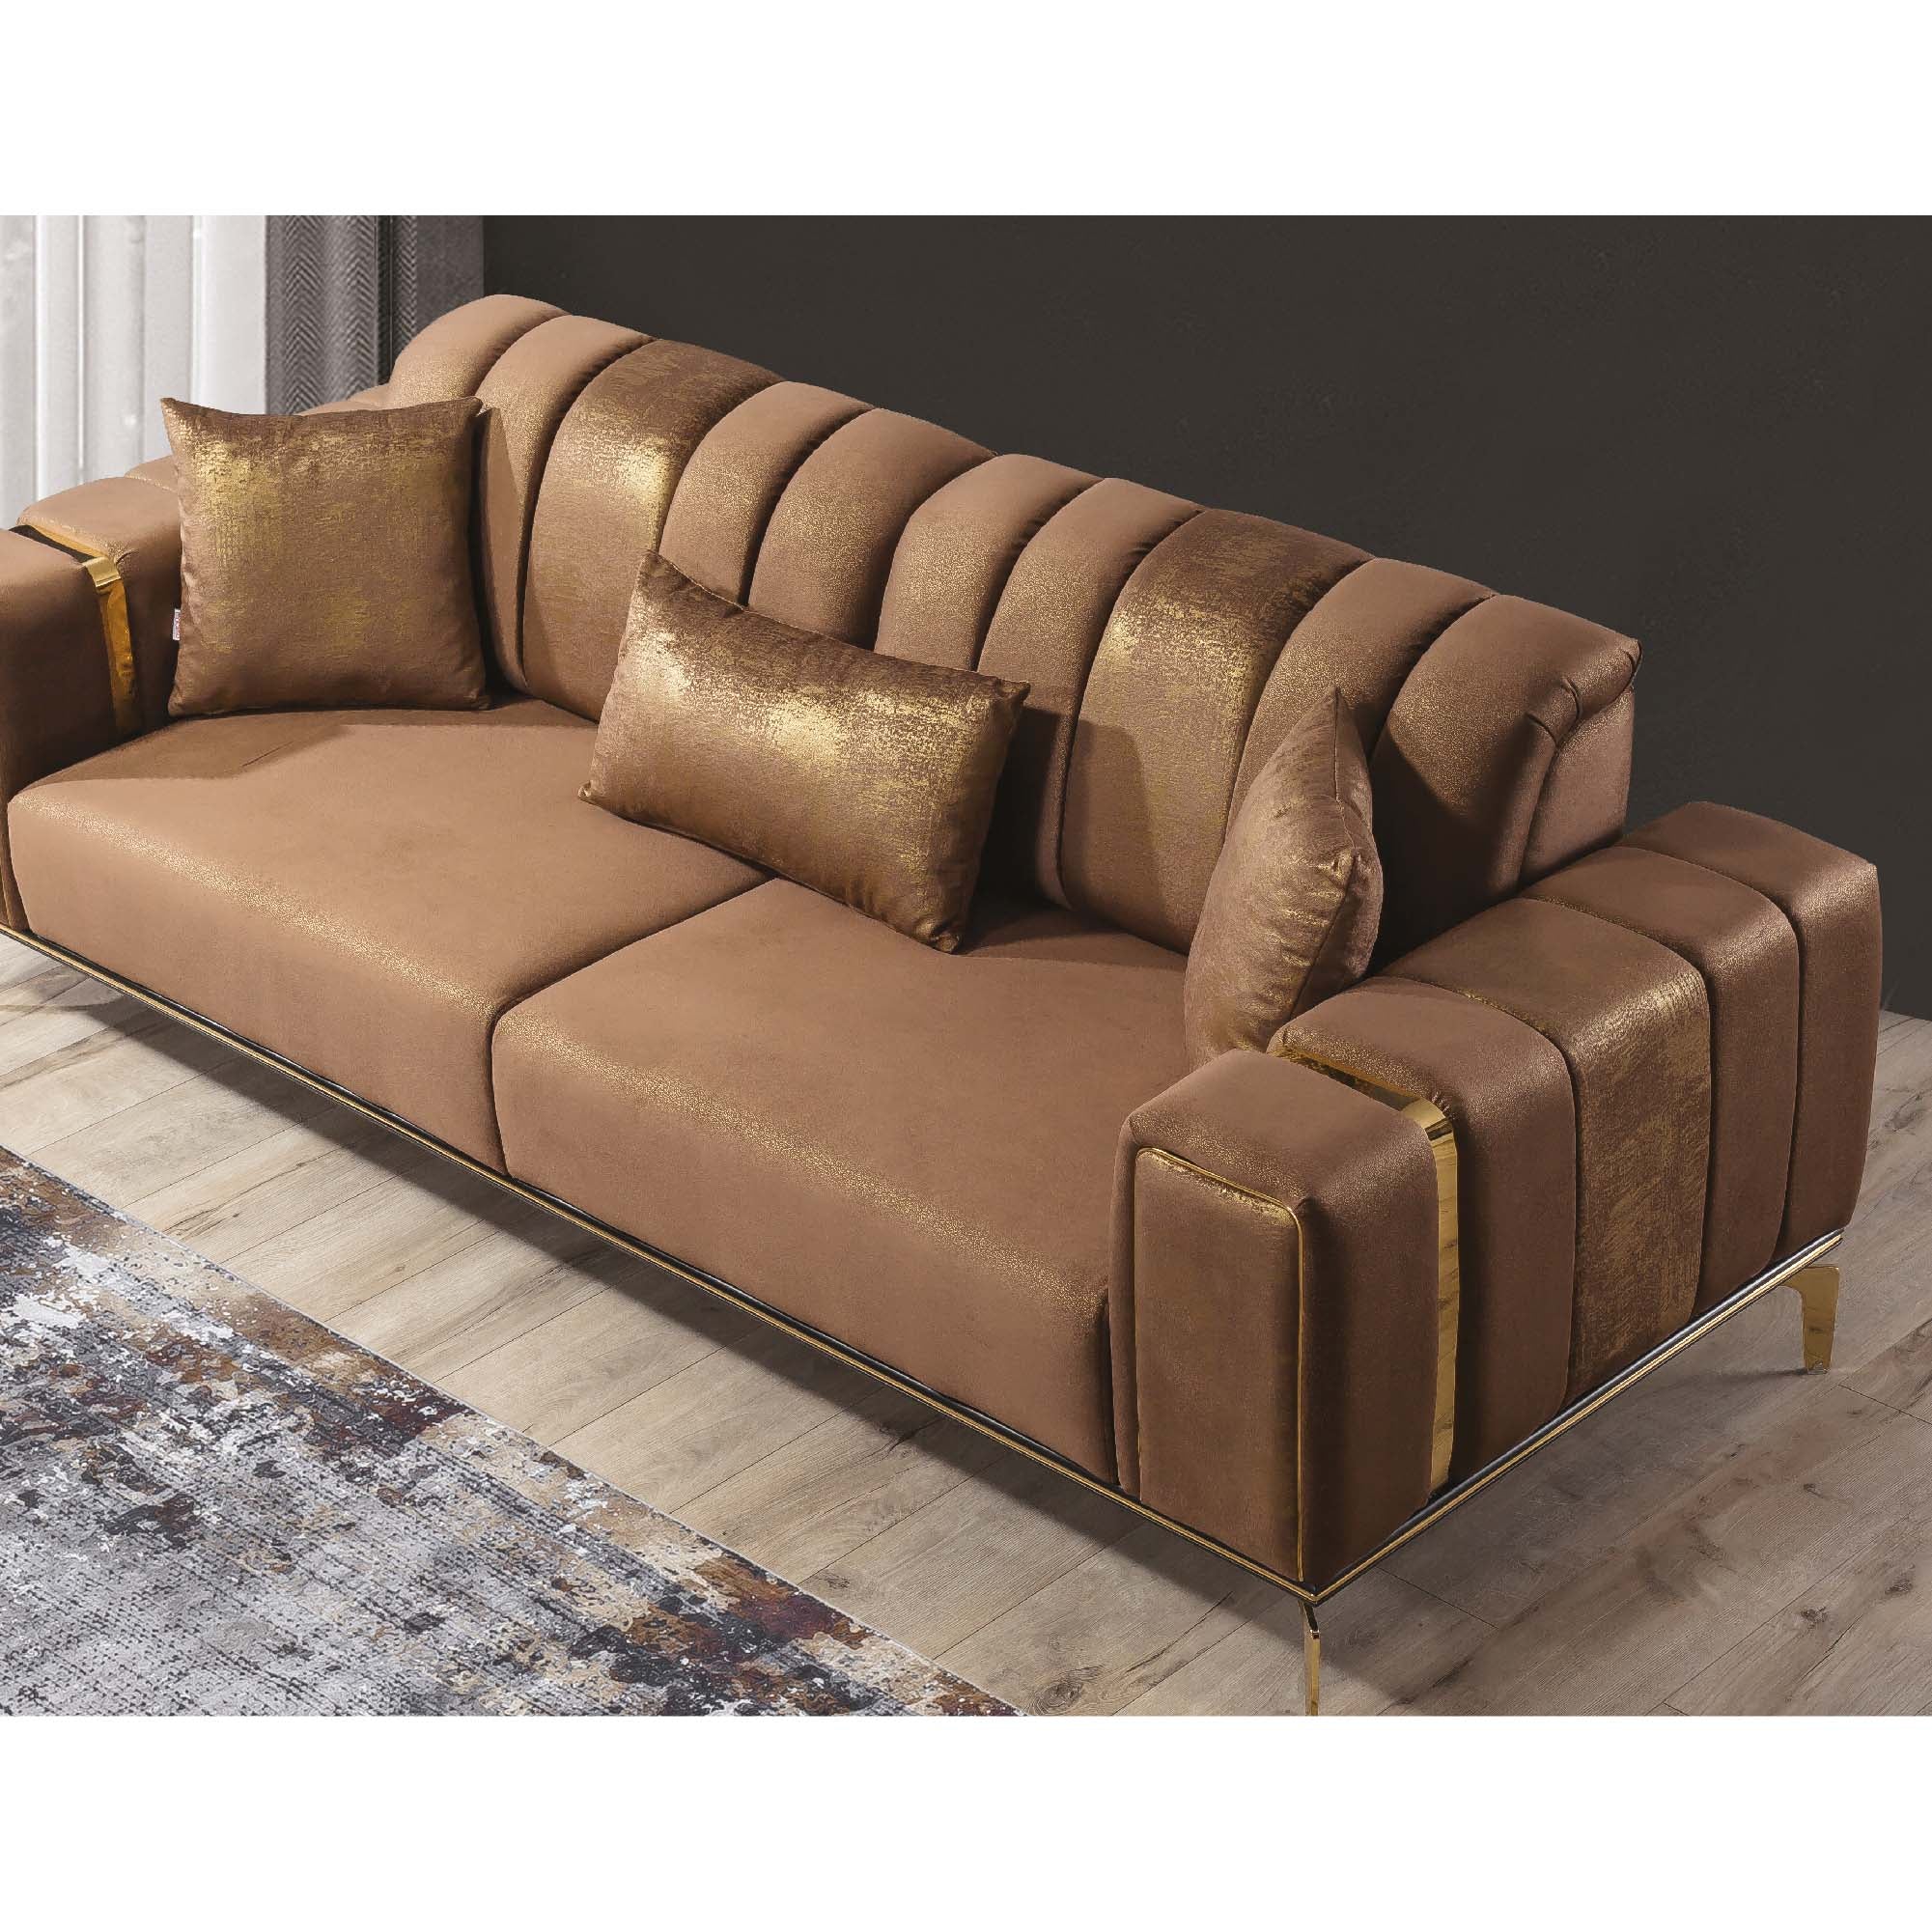 Toledo 3 Seat Sleeper - Home Store Furniture